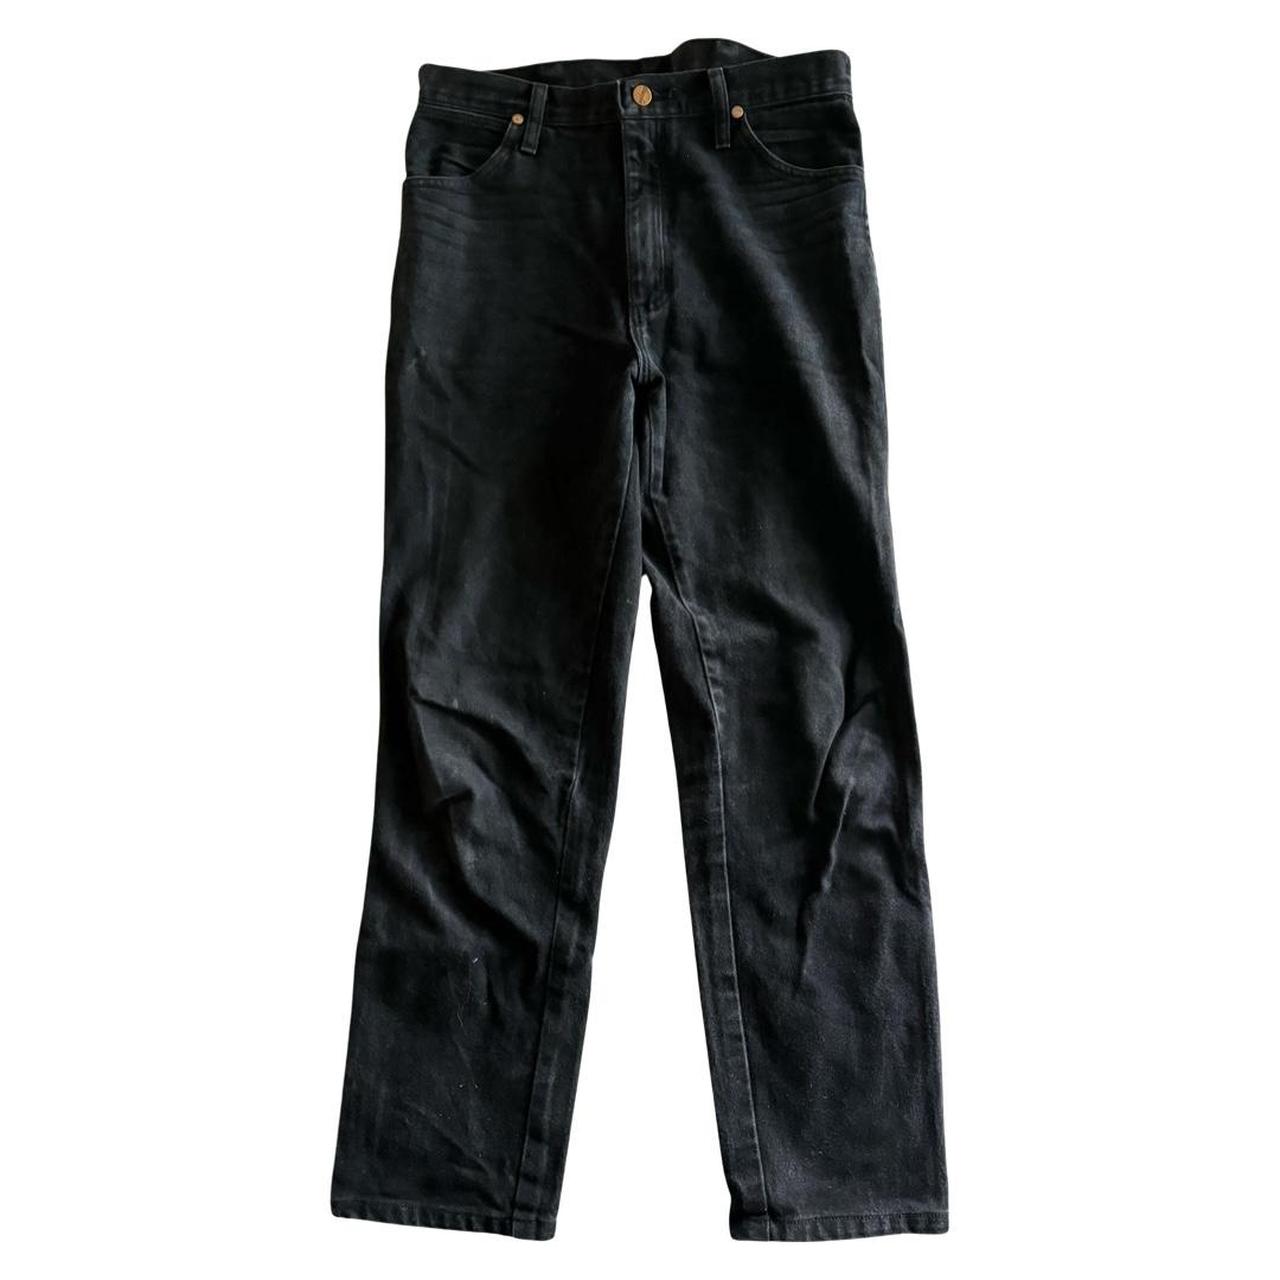 Wrangler Black 936 Cowboy Cut Slim Fit Jeans